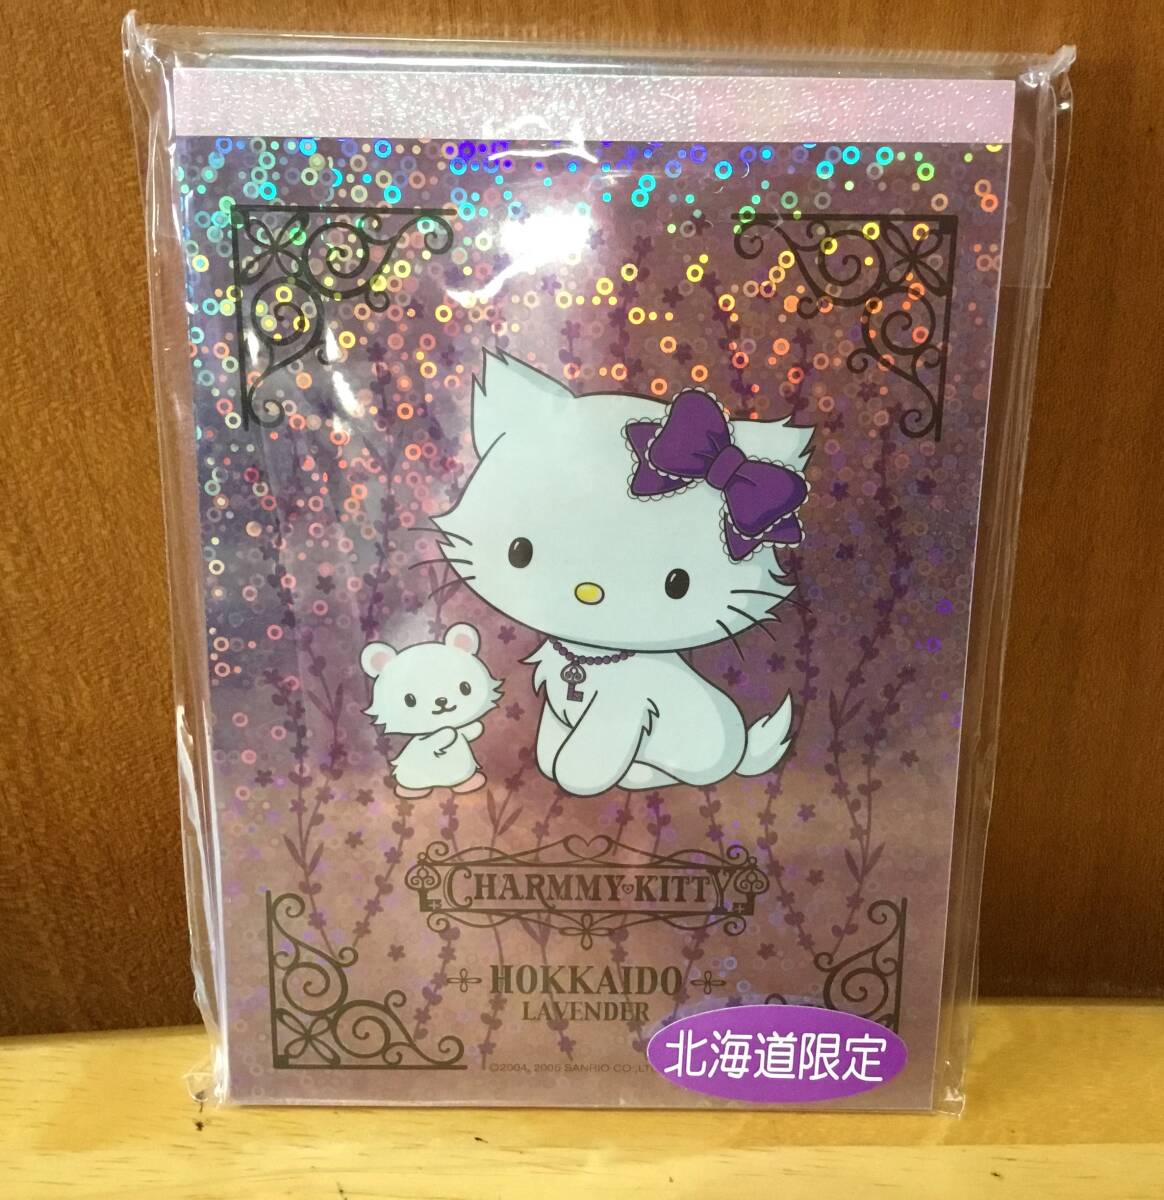  tea -mi- Kitty *. present ground memory Hokkaido limitation lavender tea -mi-2005 year 